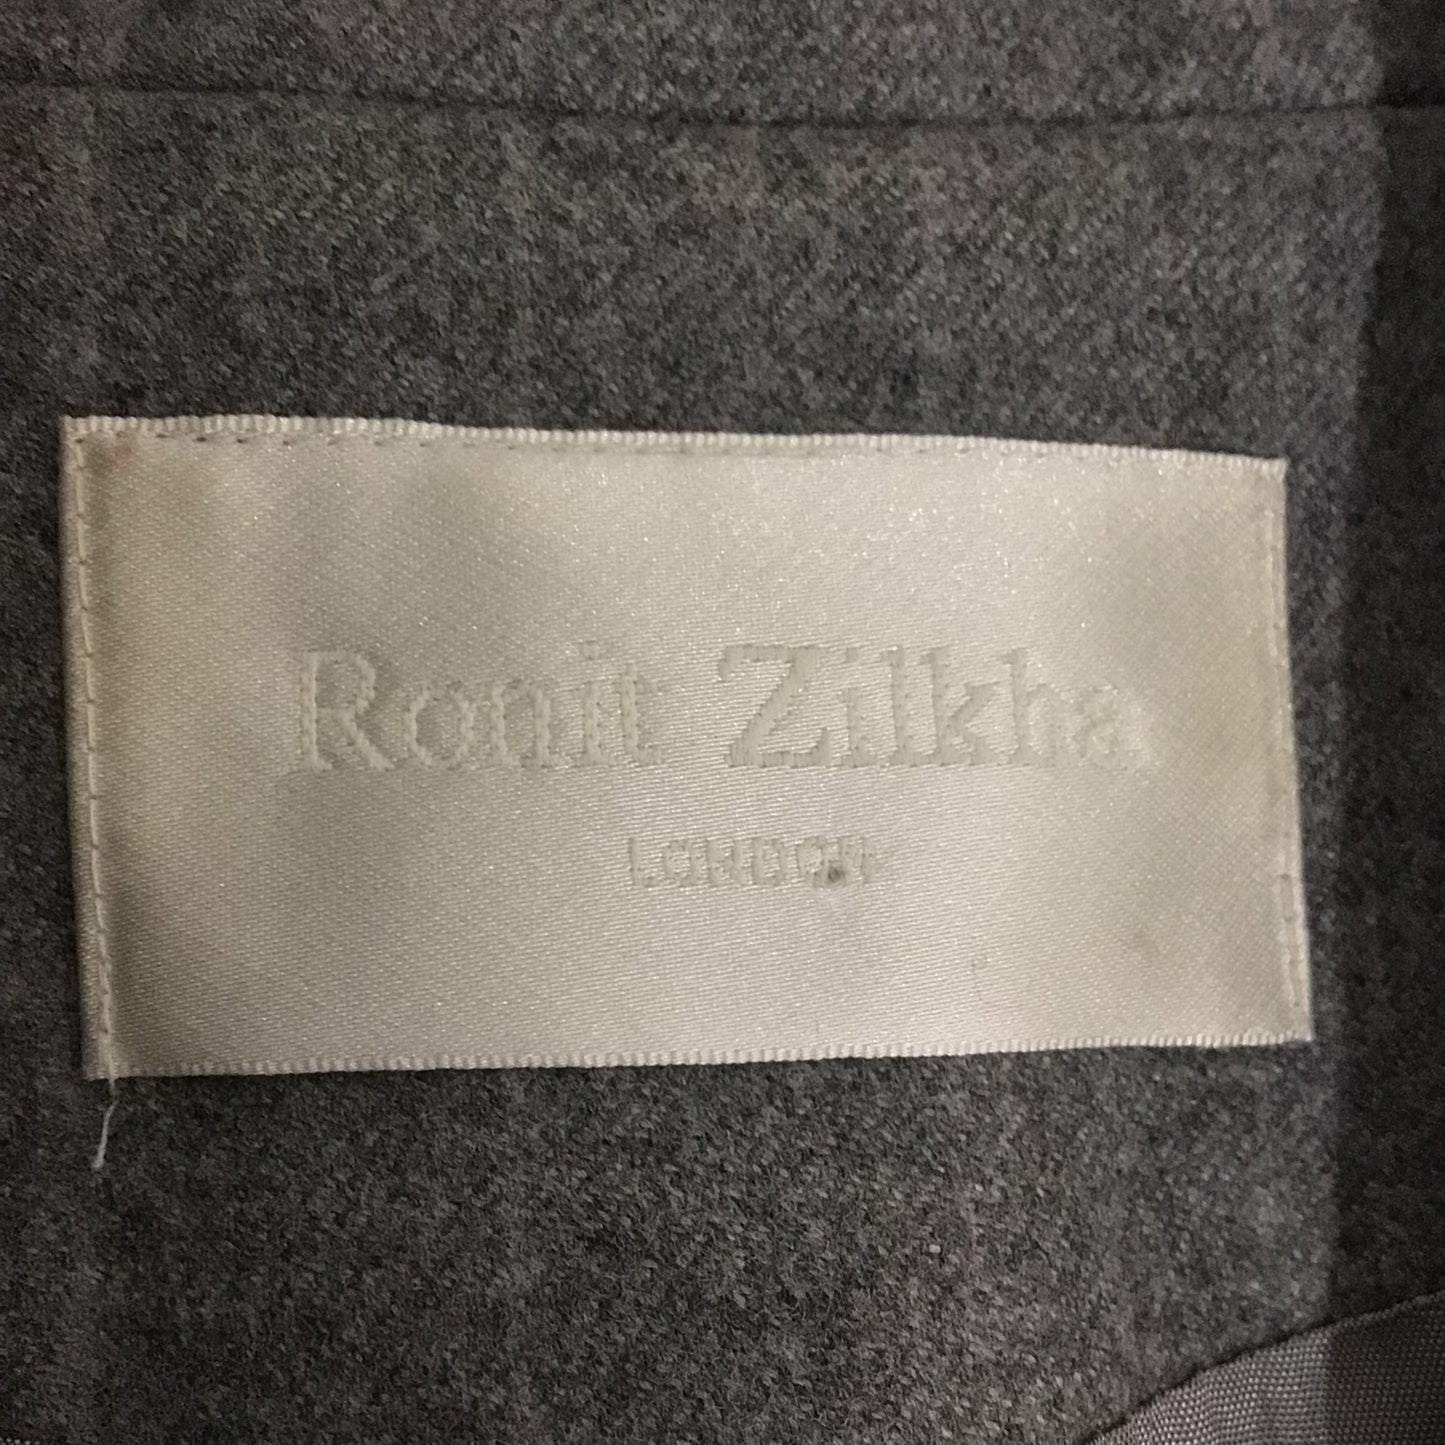 Ronit Zilkha Grey Checked Suit Jacket Blazer Size 8